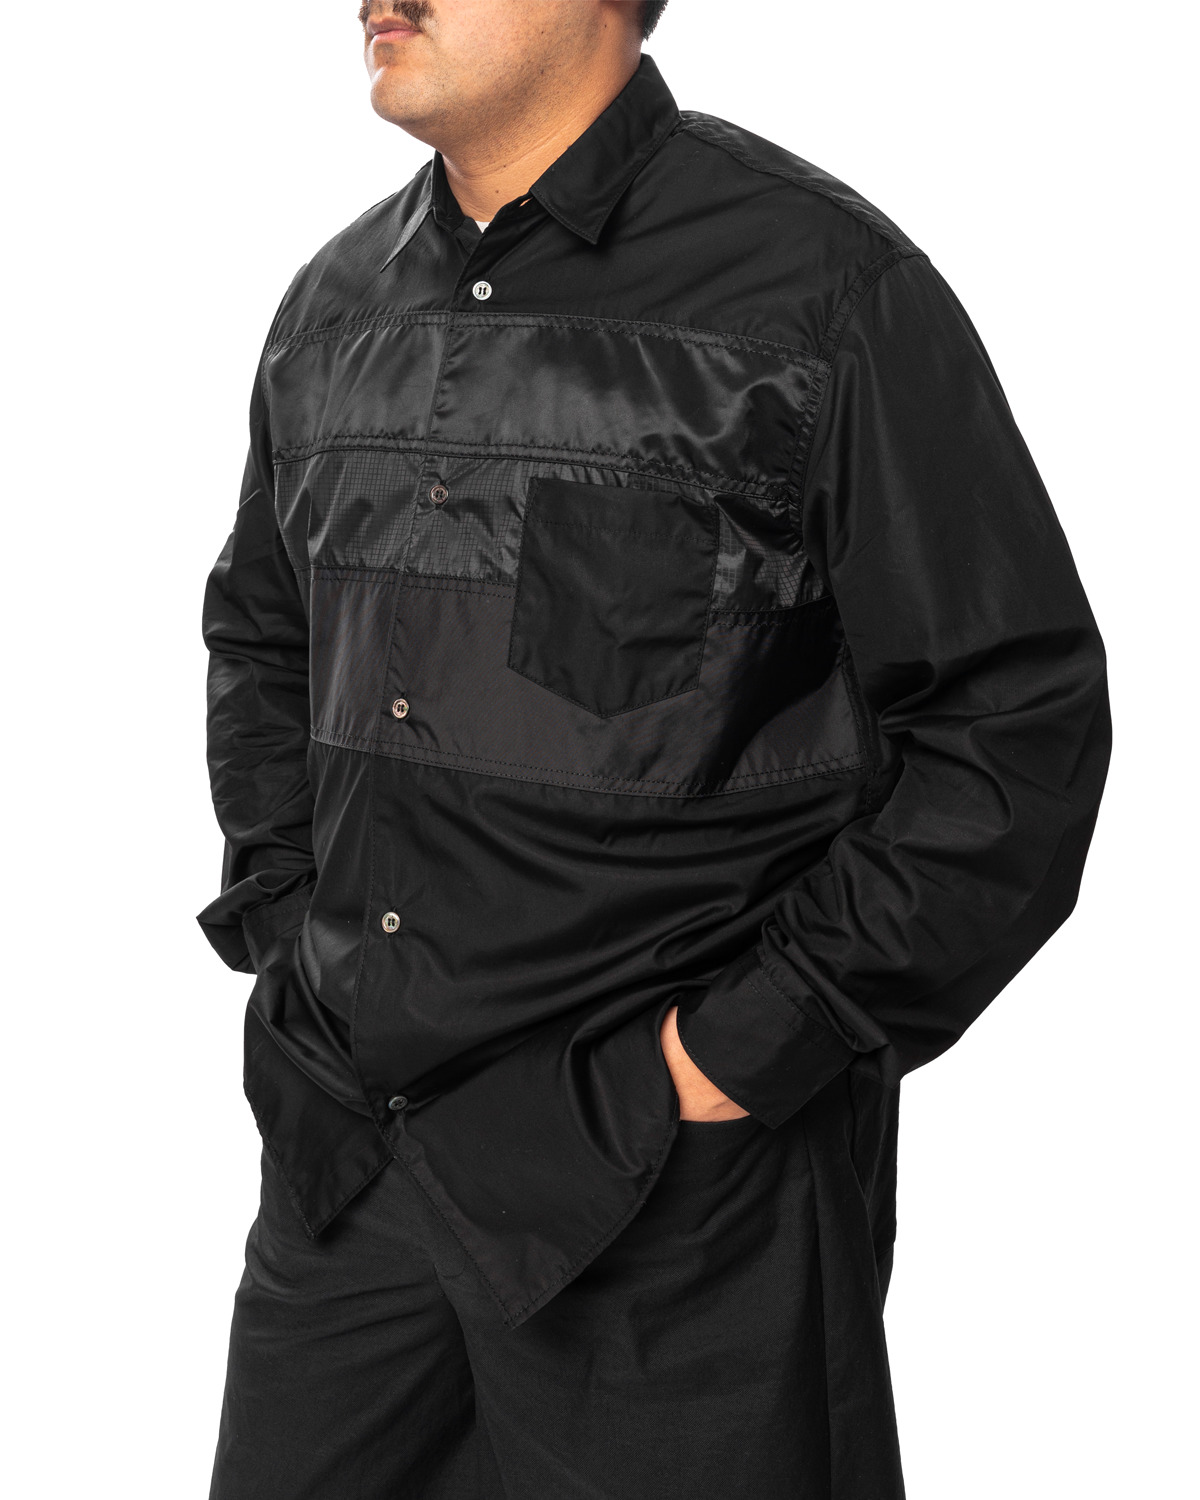 Men's Shirt Black Multi Fabric Mix HL-B001-051 - 4